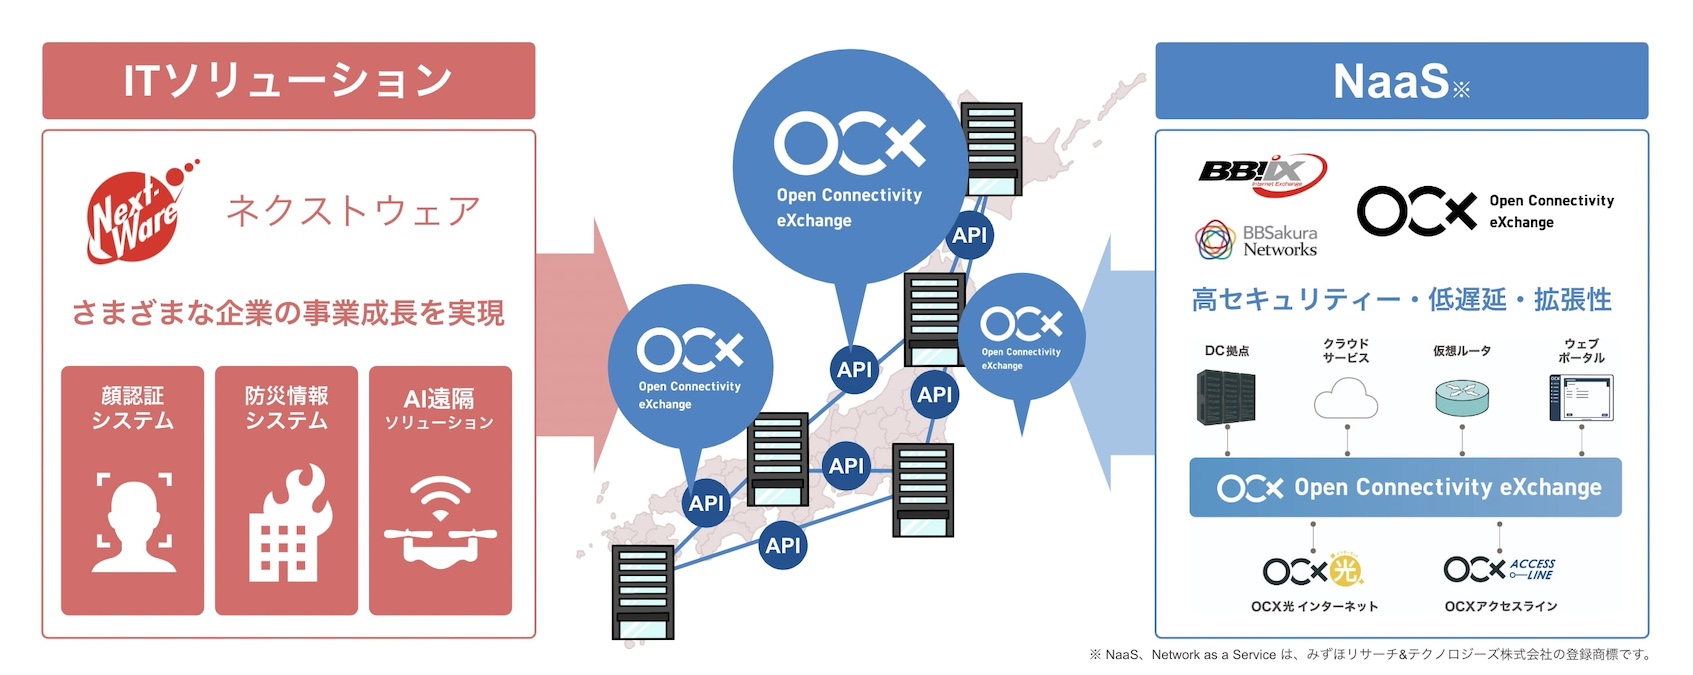 BBIXとネクストウェア、クラウド型ネットワークサービス「Open Connectivity eXchange」の活用に関する戦略的協業契約を締結　地域DXに向け